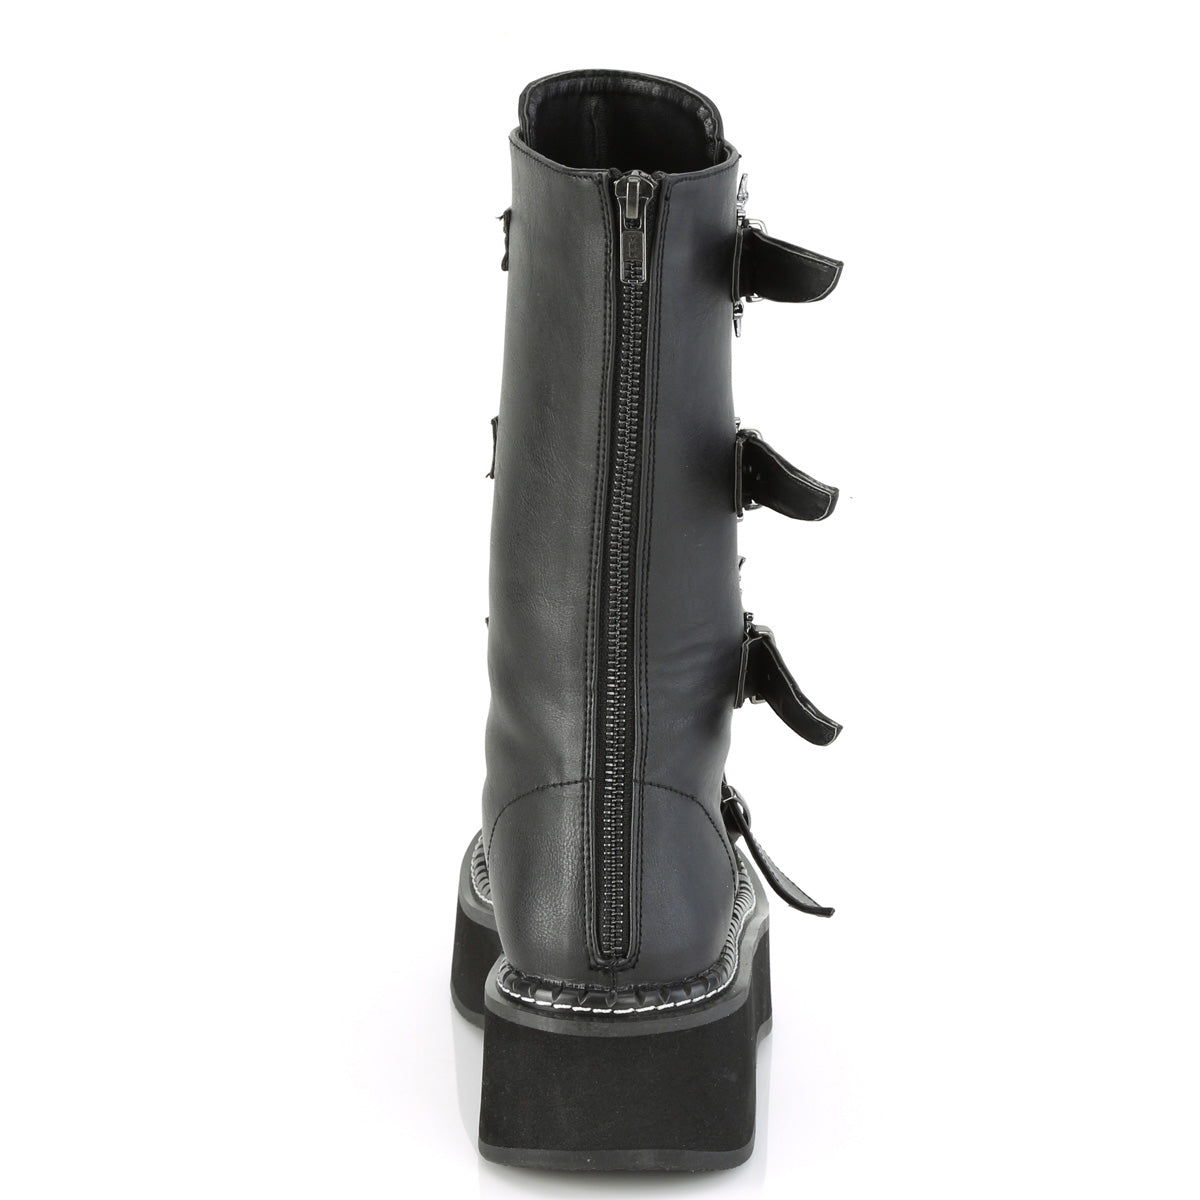 EMILY-322 Demonia Black Vegan Leather Women's Mid-Calf & Knee High Boots [Demonia Cult Alternative Footwear]